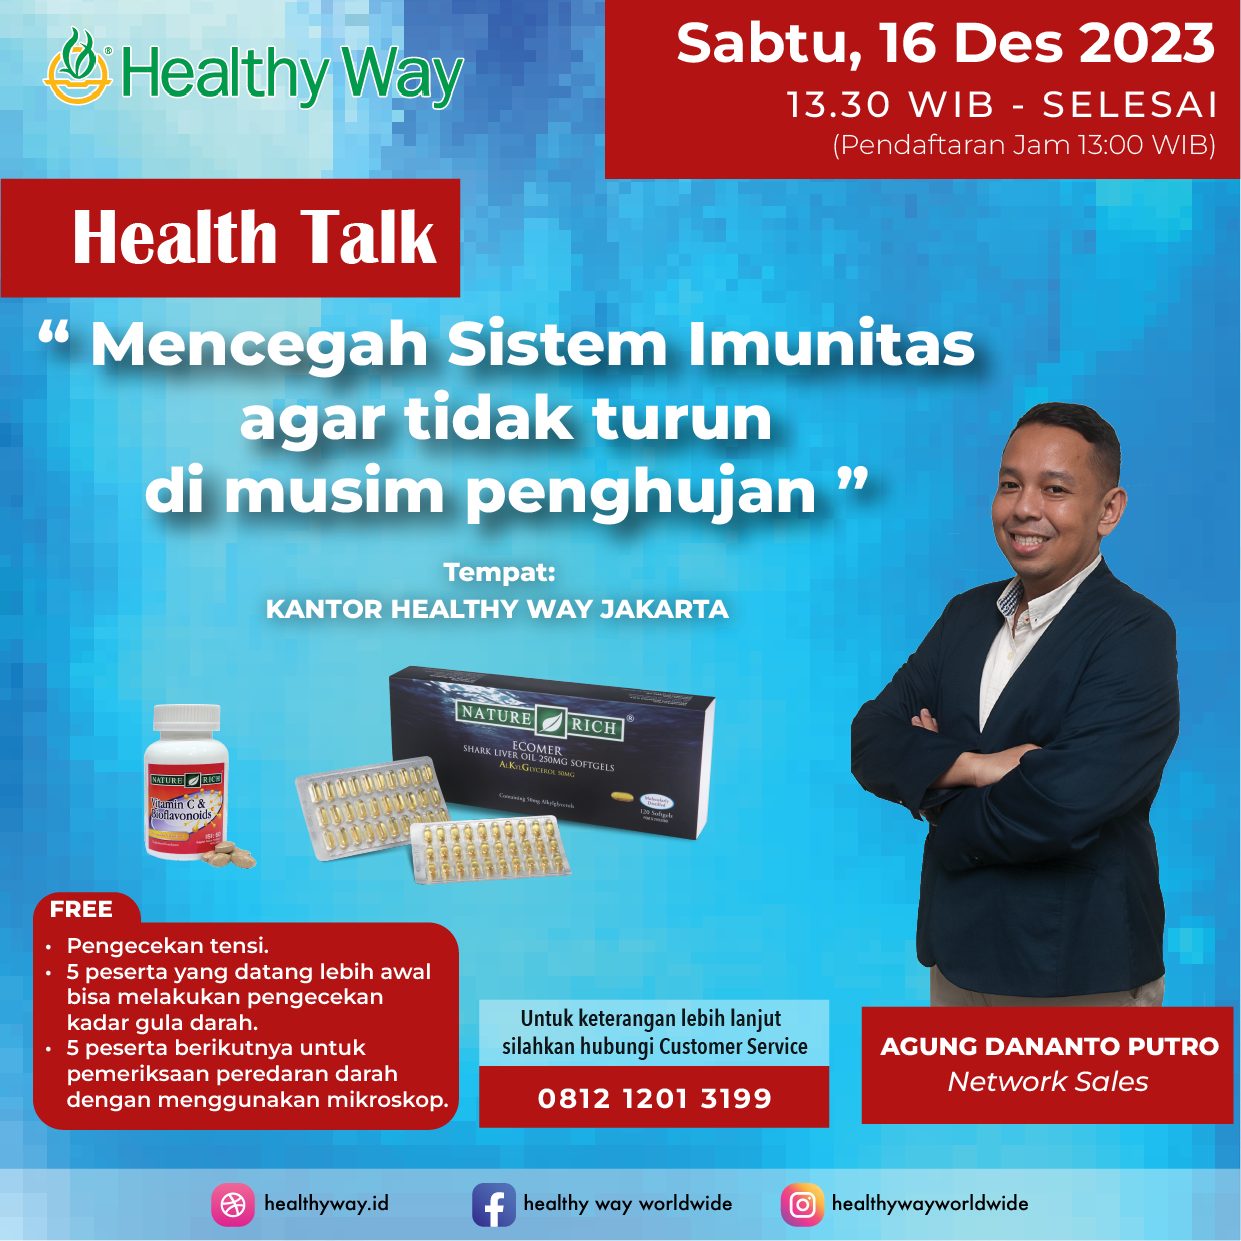 Health Talk Healthy Way